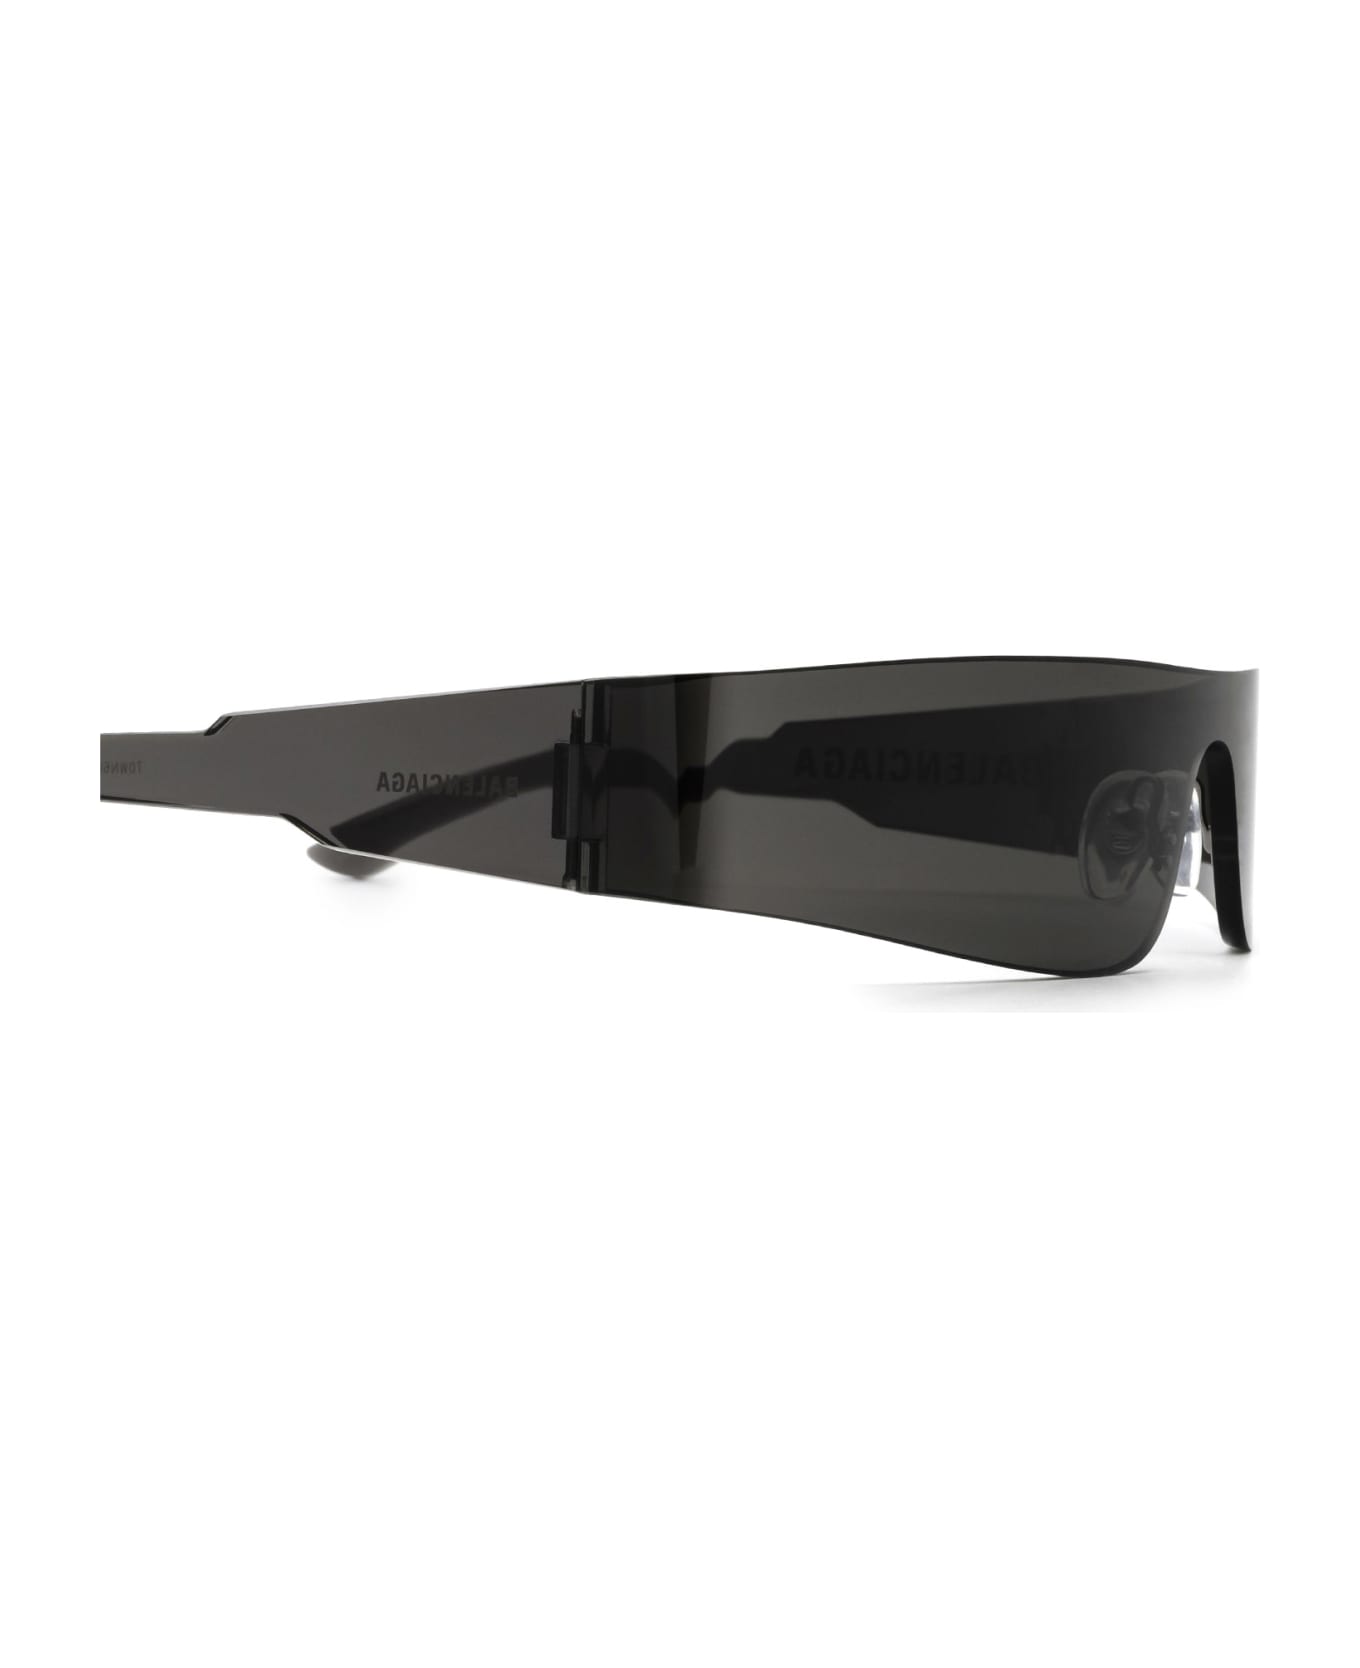 Balenciaga Eyewear Bb0041s Sunglasses - Black